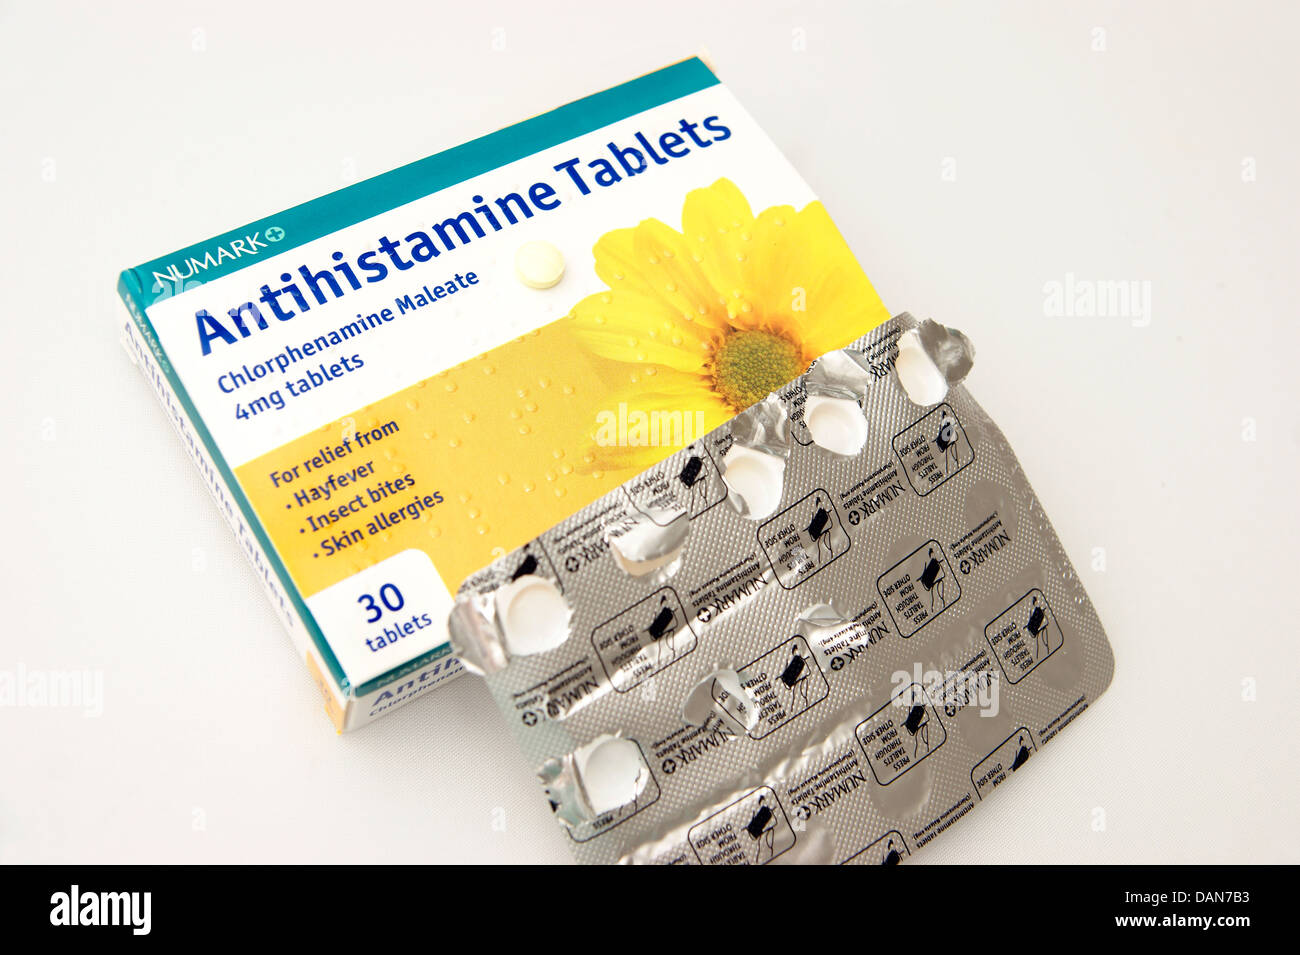 Antihistamine tablets (chlorphenamine maleate) for hayfever insect bites & skin allergies Stock Photo